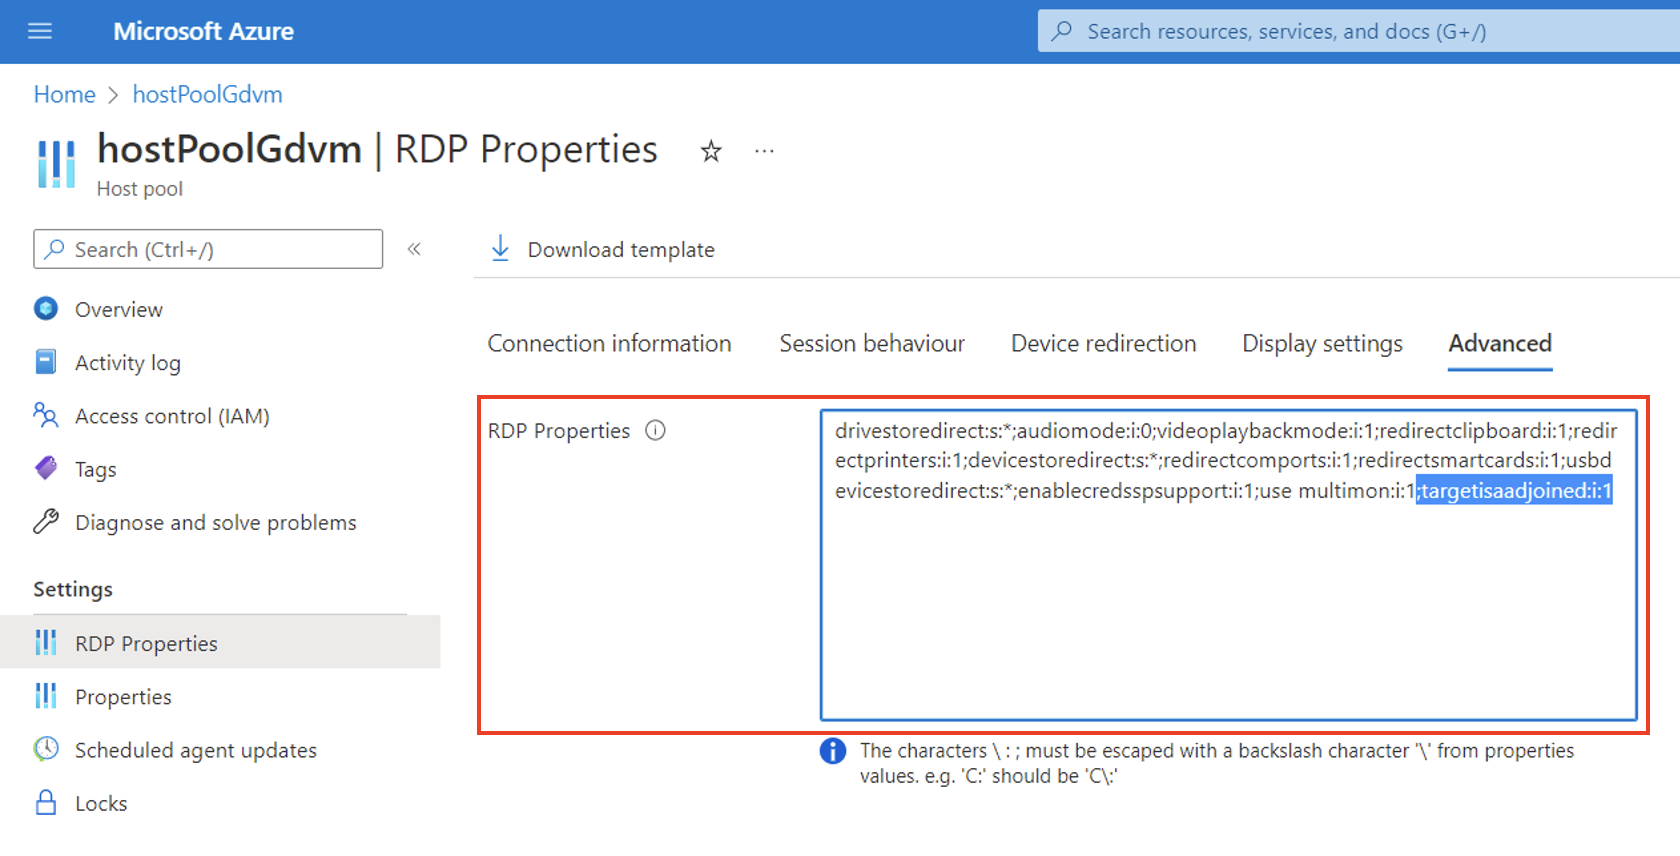 Screenshot showing the RDP properties of host pool